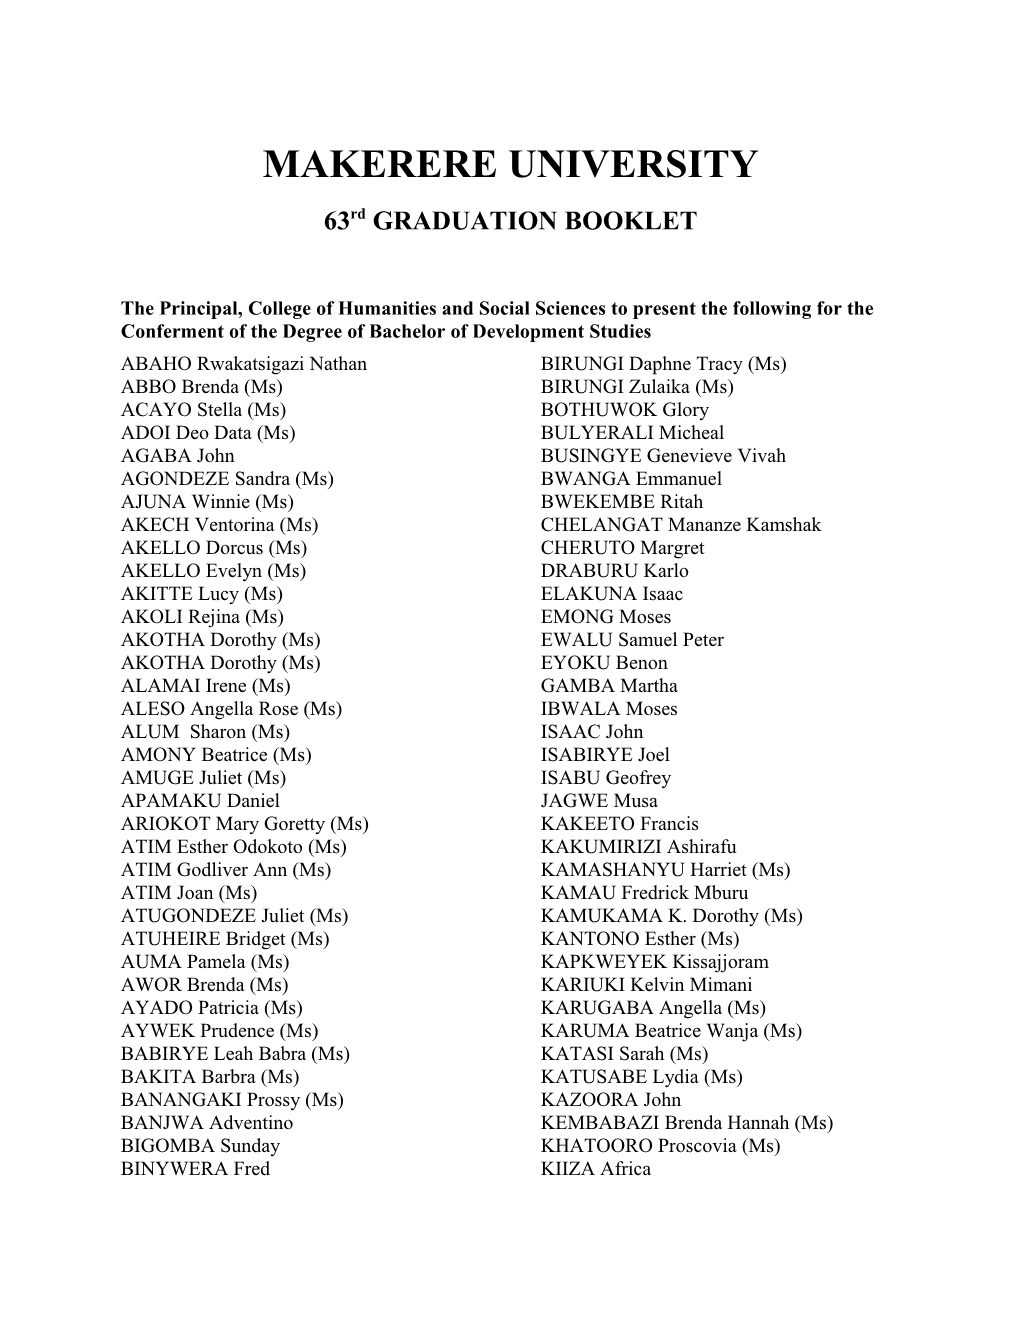 Makerere University s3